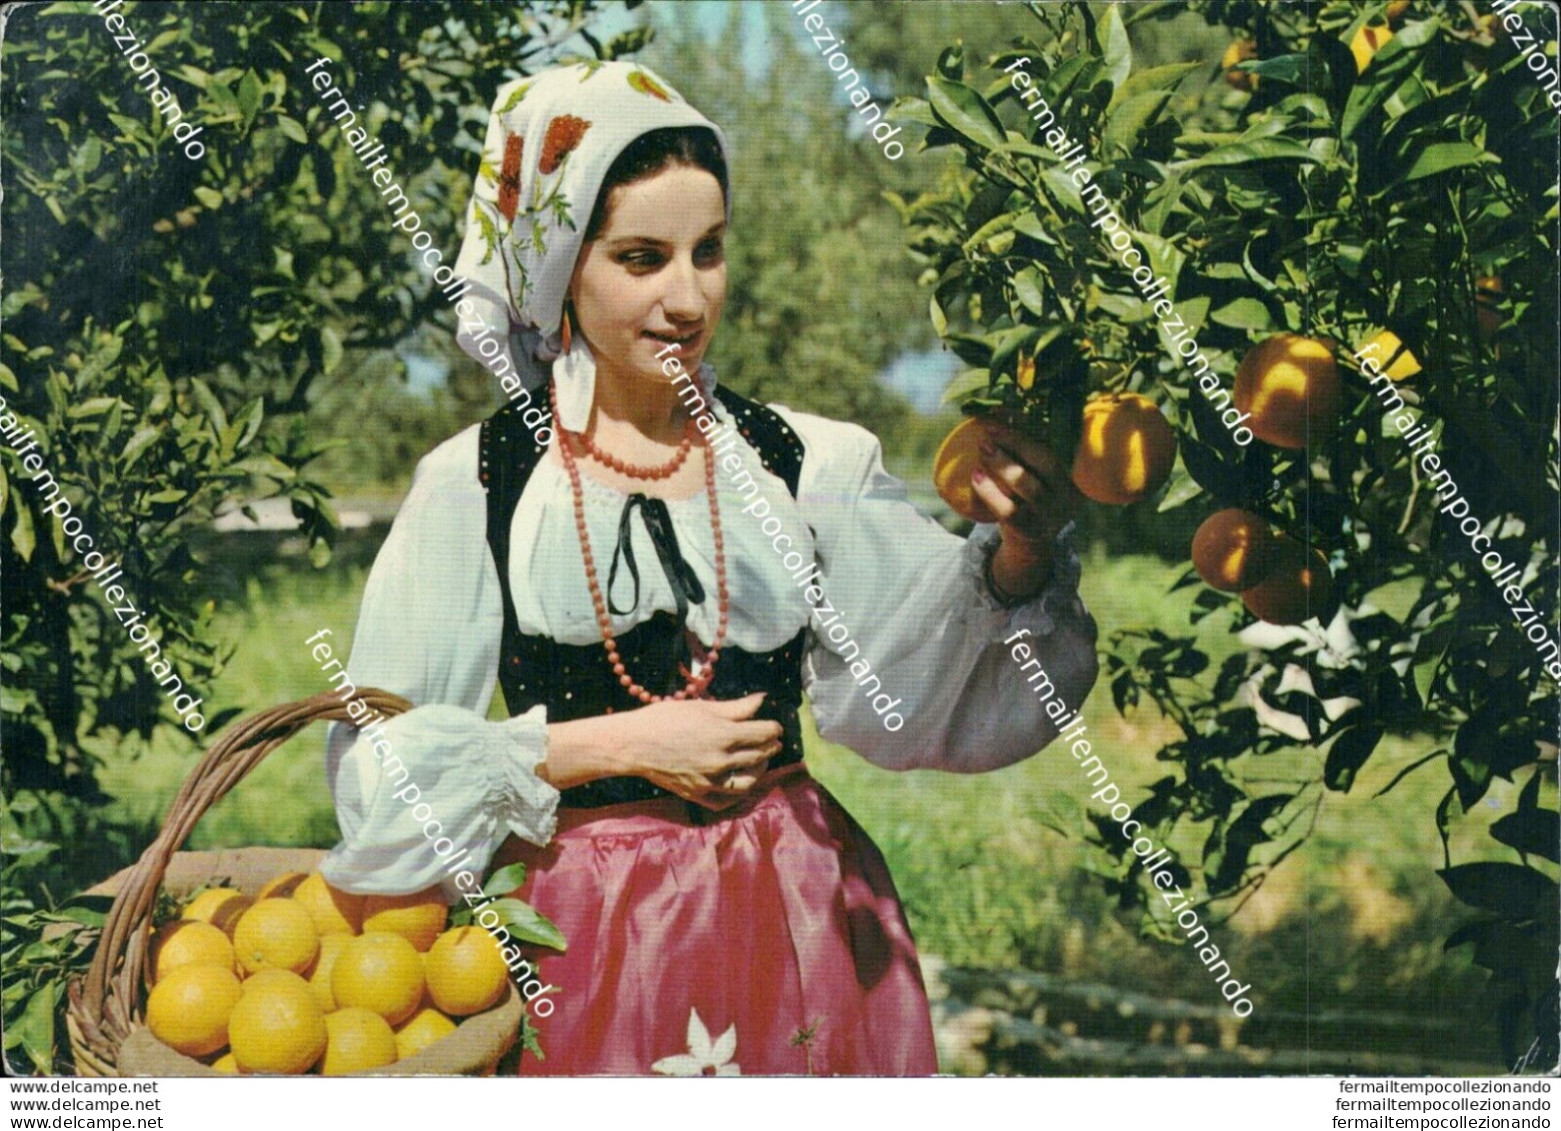 Bn279 Cartolina Sicilia Costumi Siciliani Raccolta Arance - Agrigento